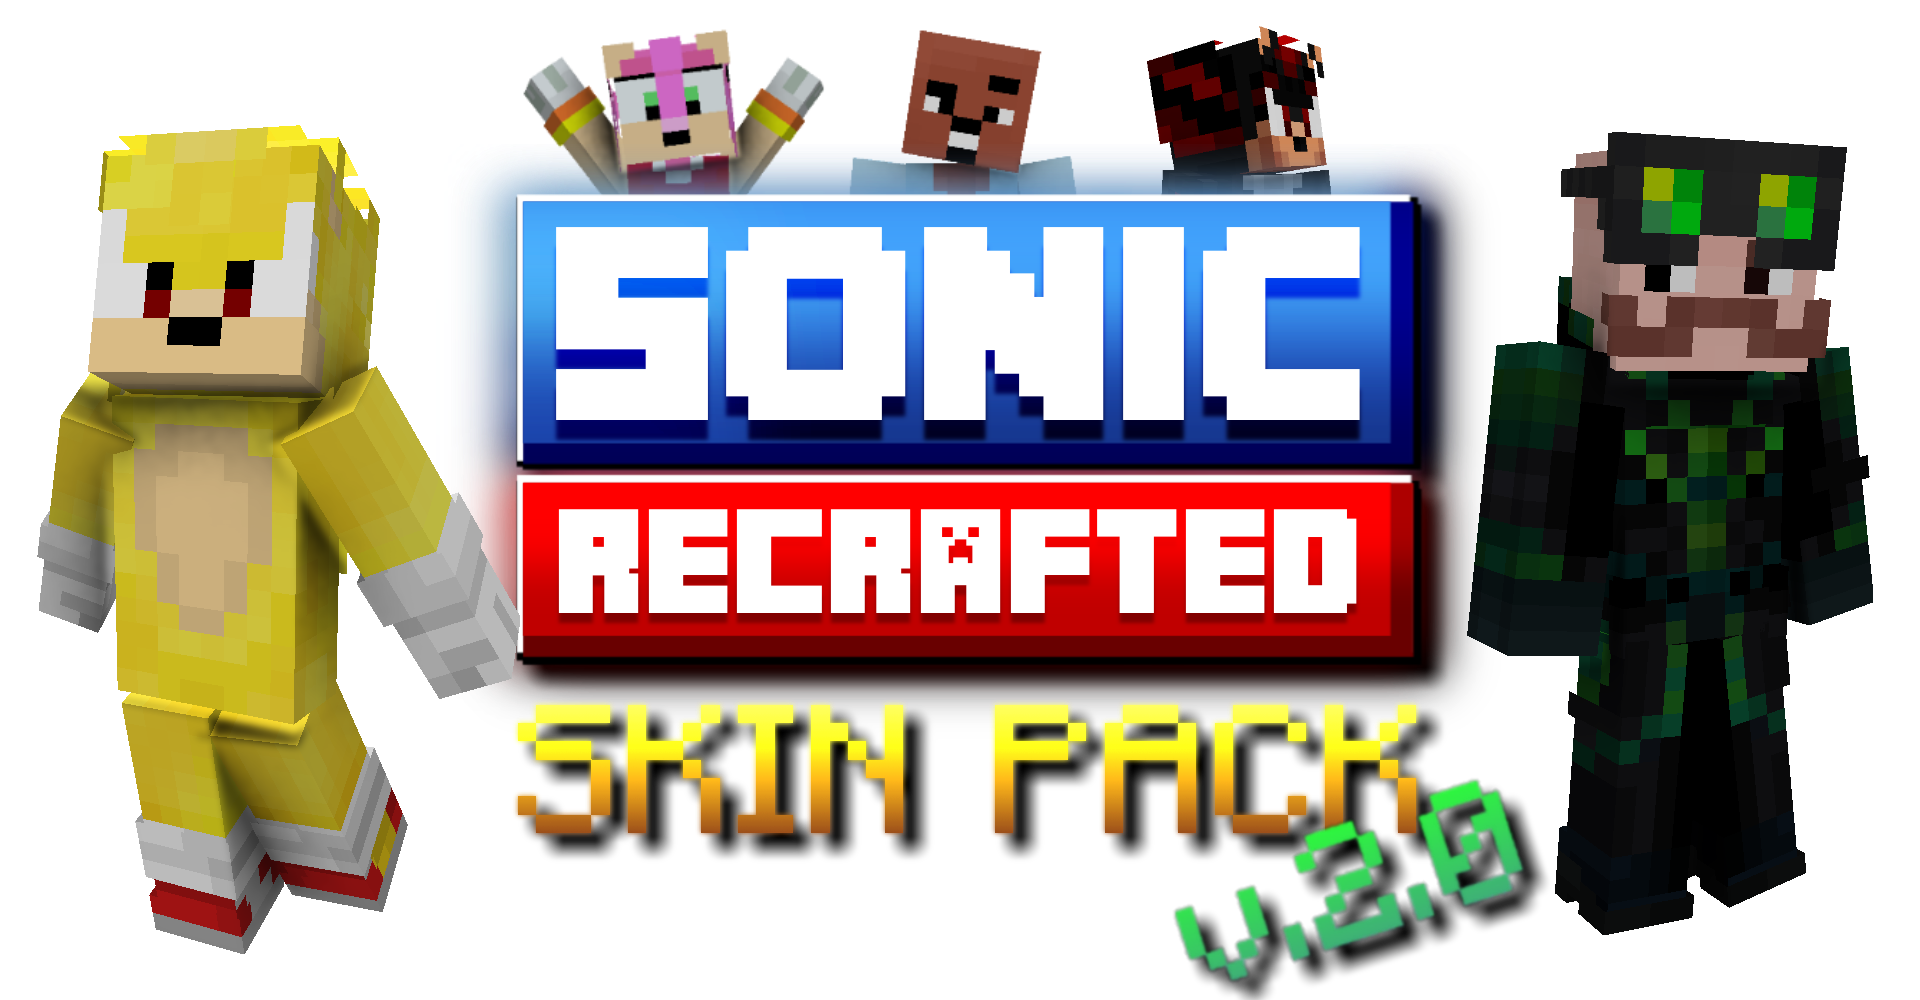 Classic Super Sonic the Hedgehog Minecraft Skin